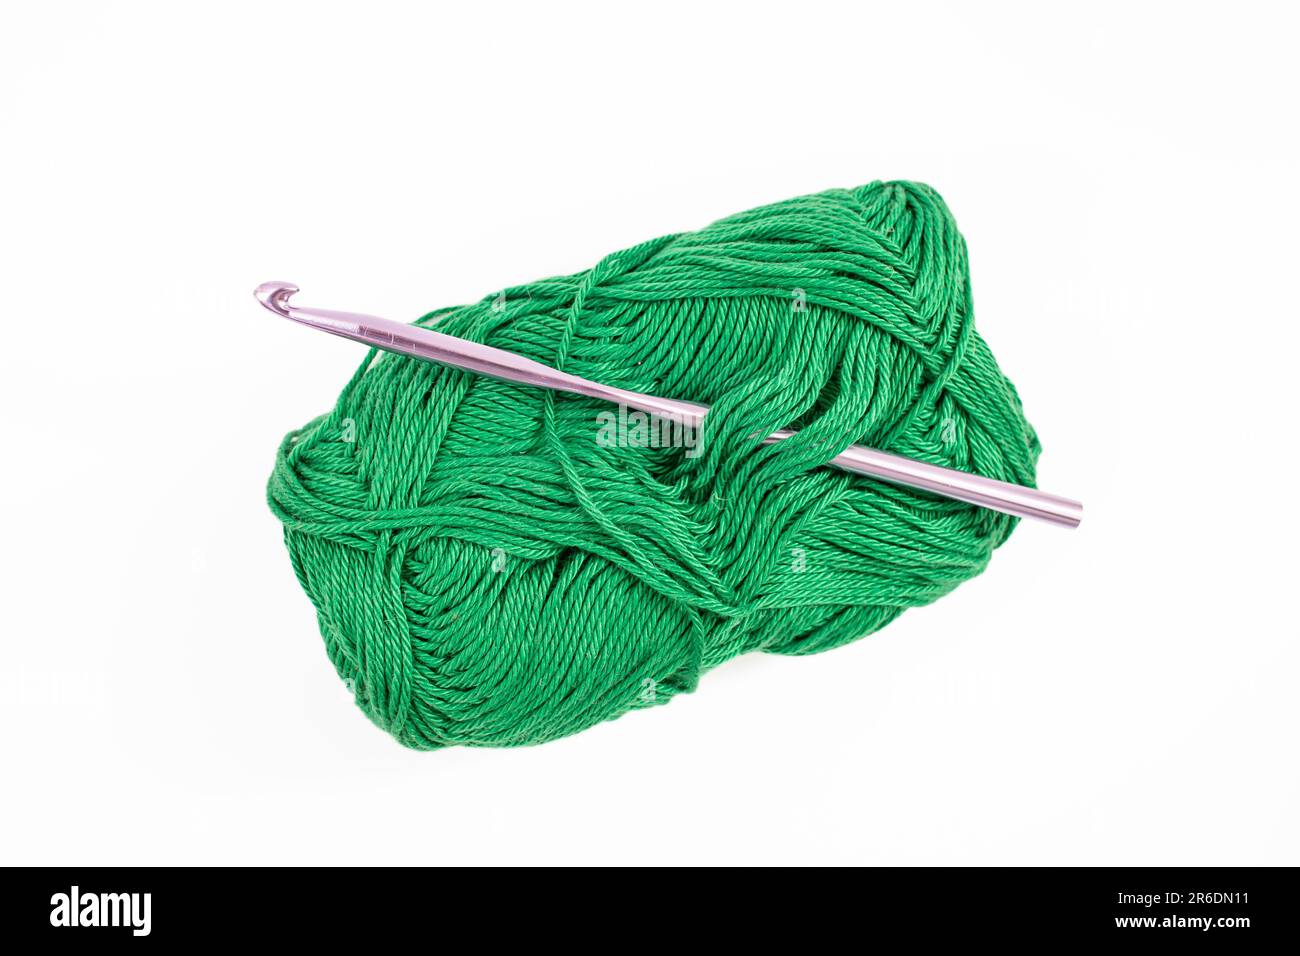 https://c8.alamy.com/comp/2R6DN11/dark-green-thread-spool-with-purple-crochet-hook-isolated-on-white-background-2R6DN11.jpg